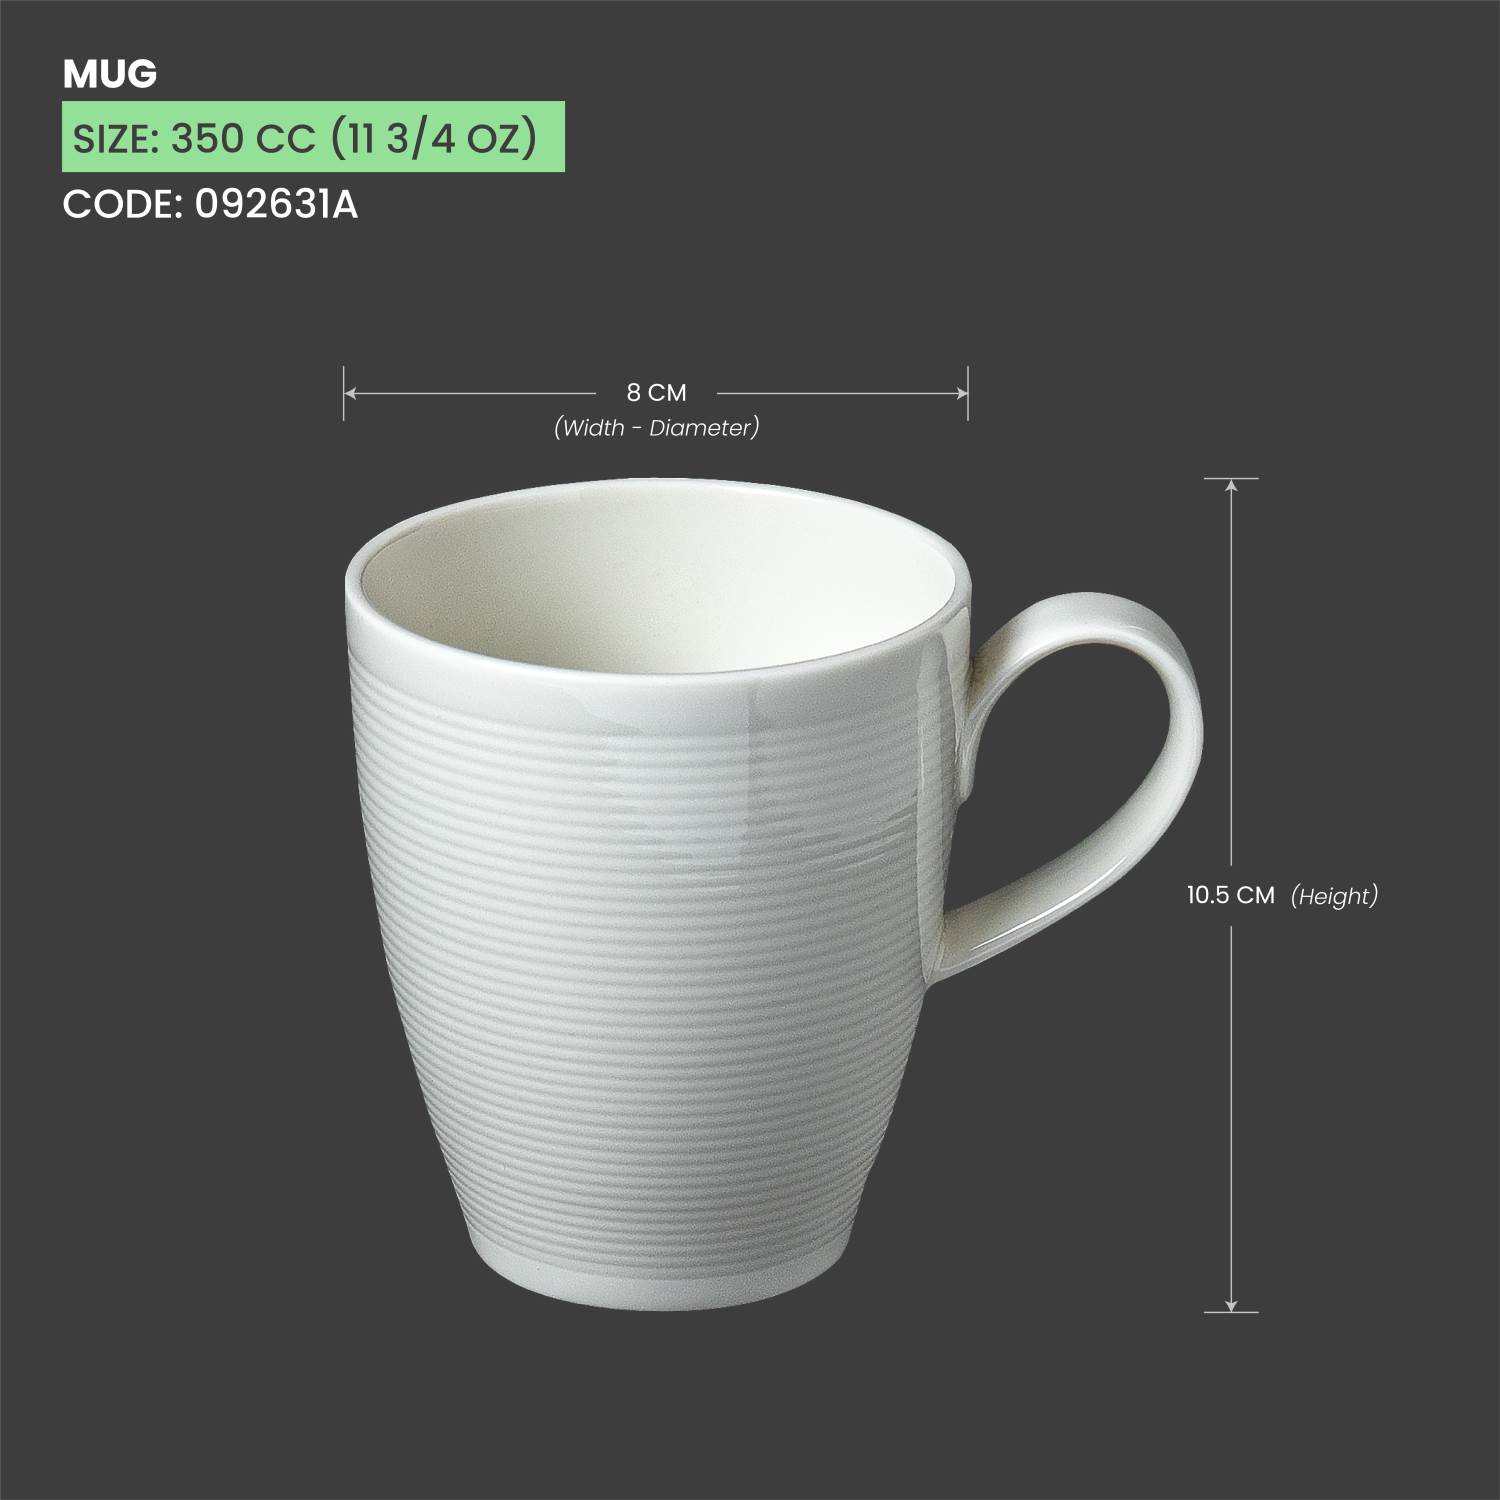 Baralee Wish Mug 350 Cc (11 3/4 Oz)